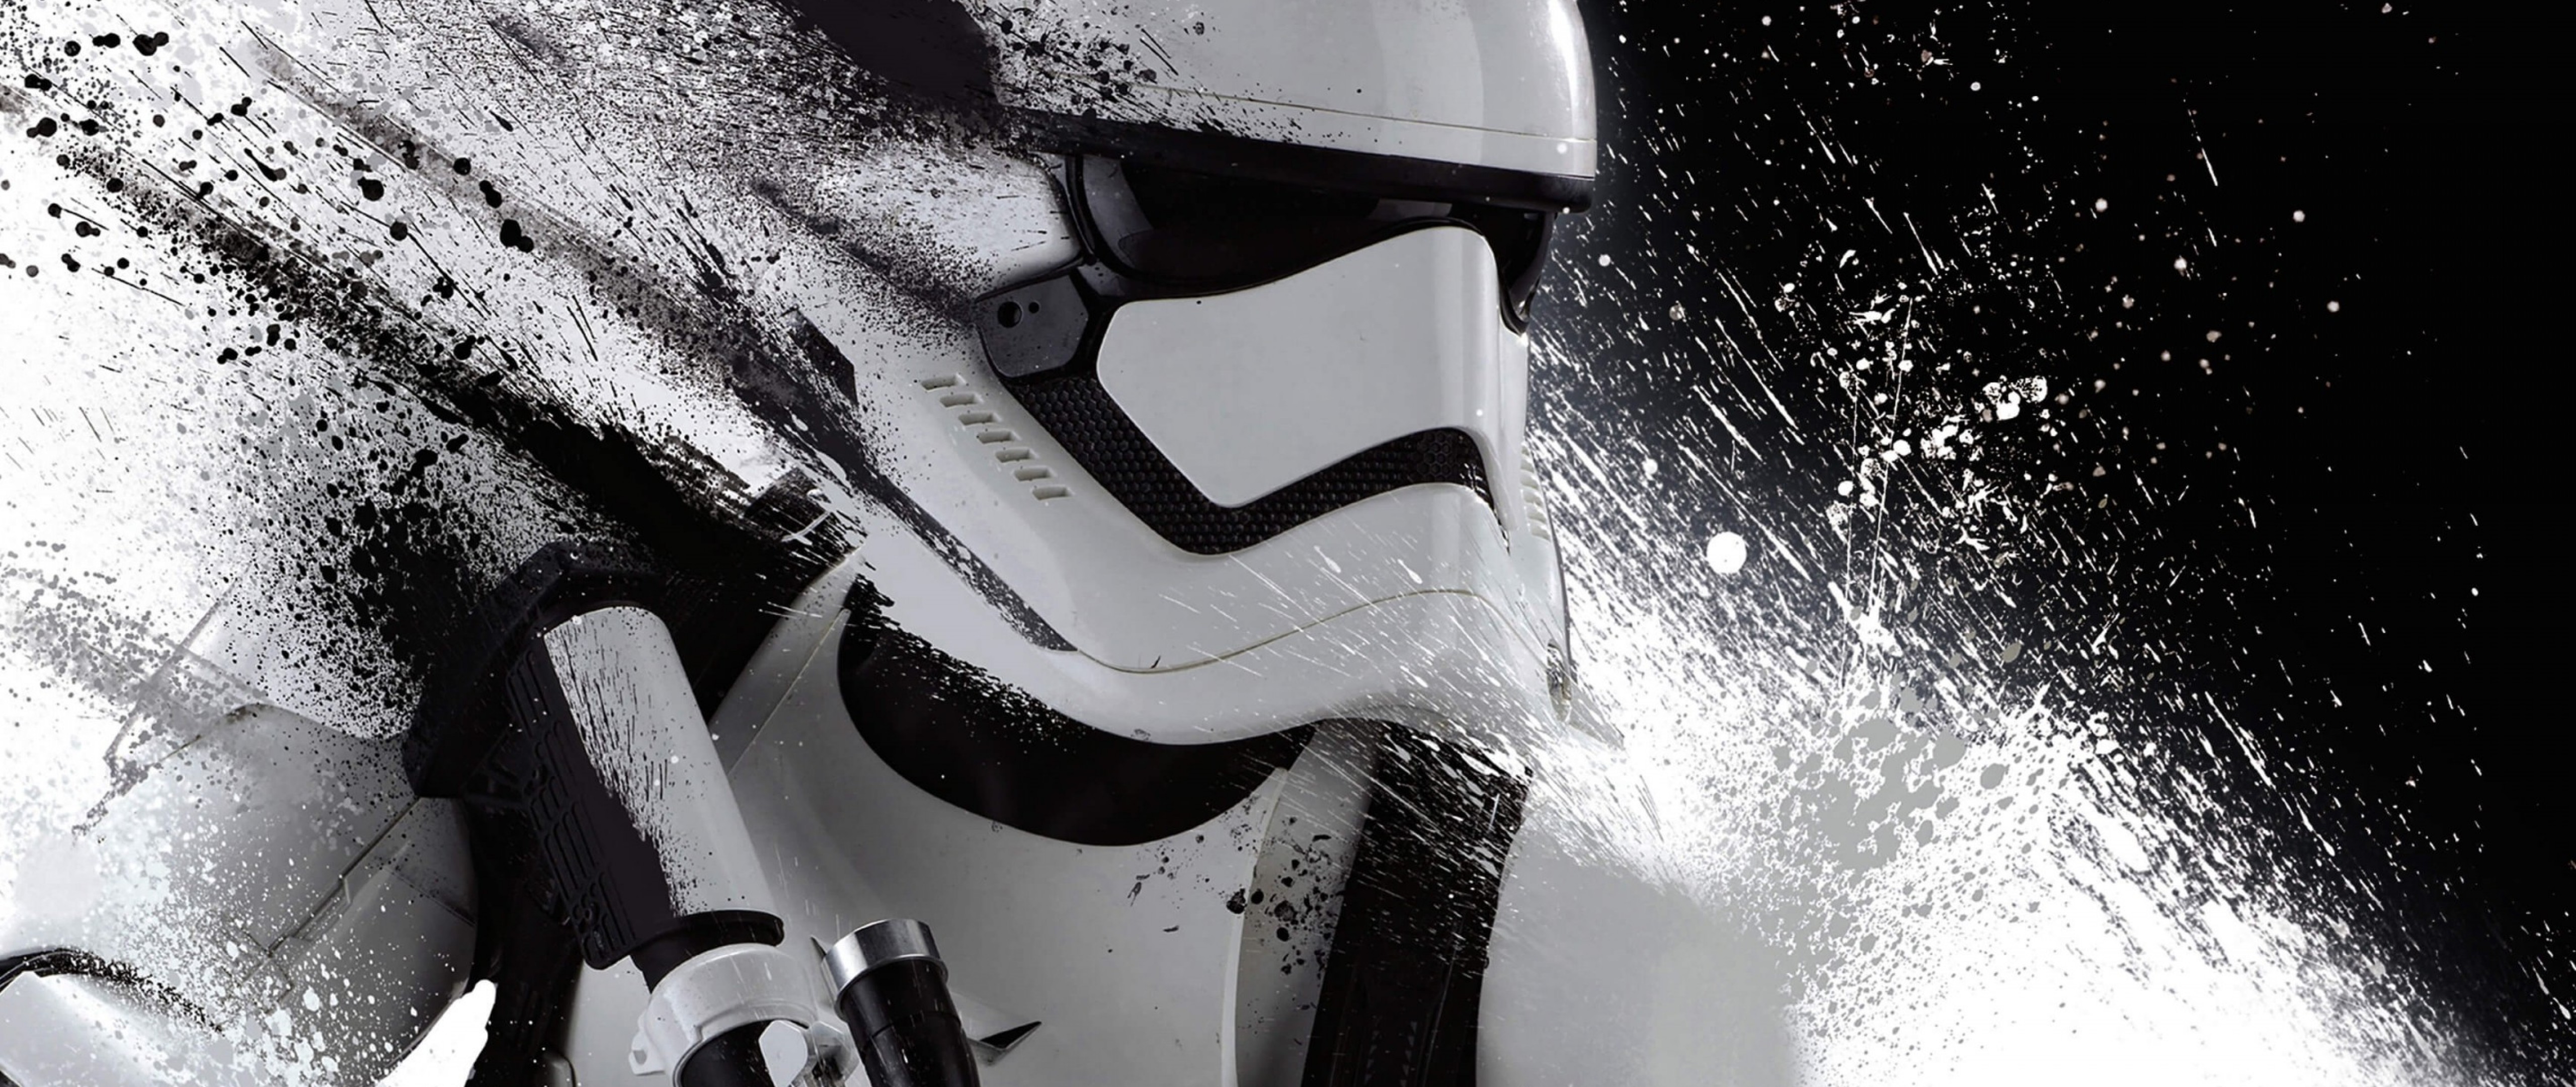 Star Wars Stormtrooper HD Wallpaper For Desktop And Mobiles 4k